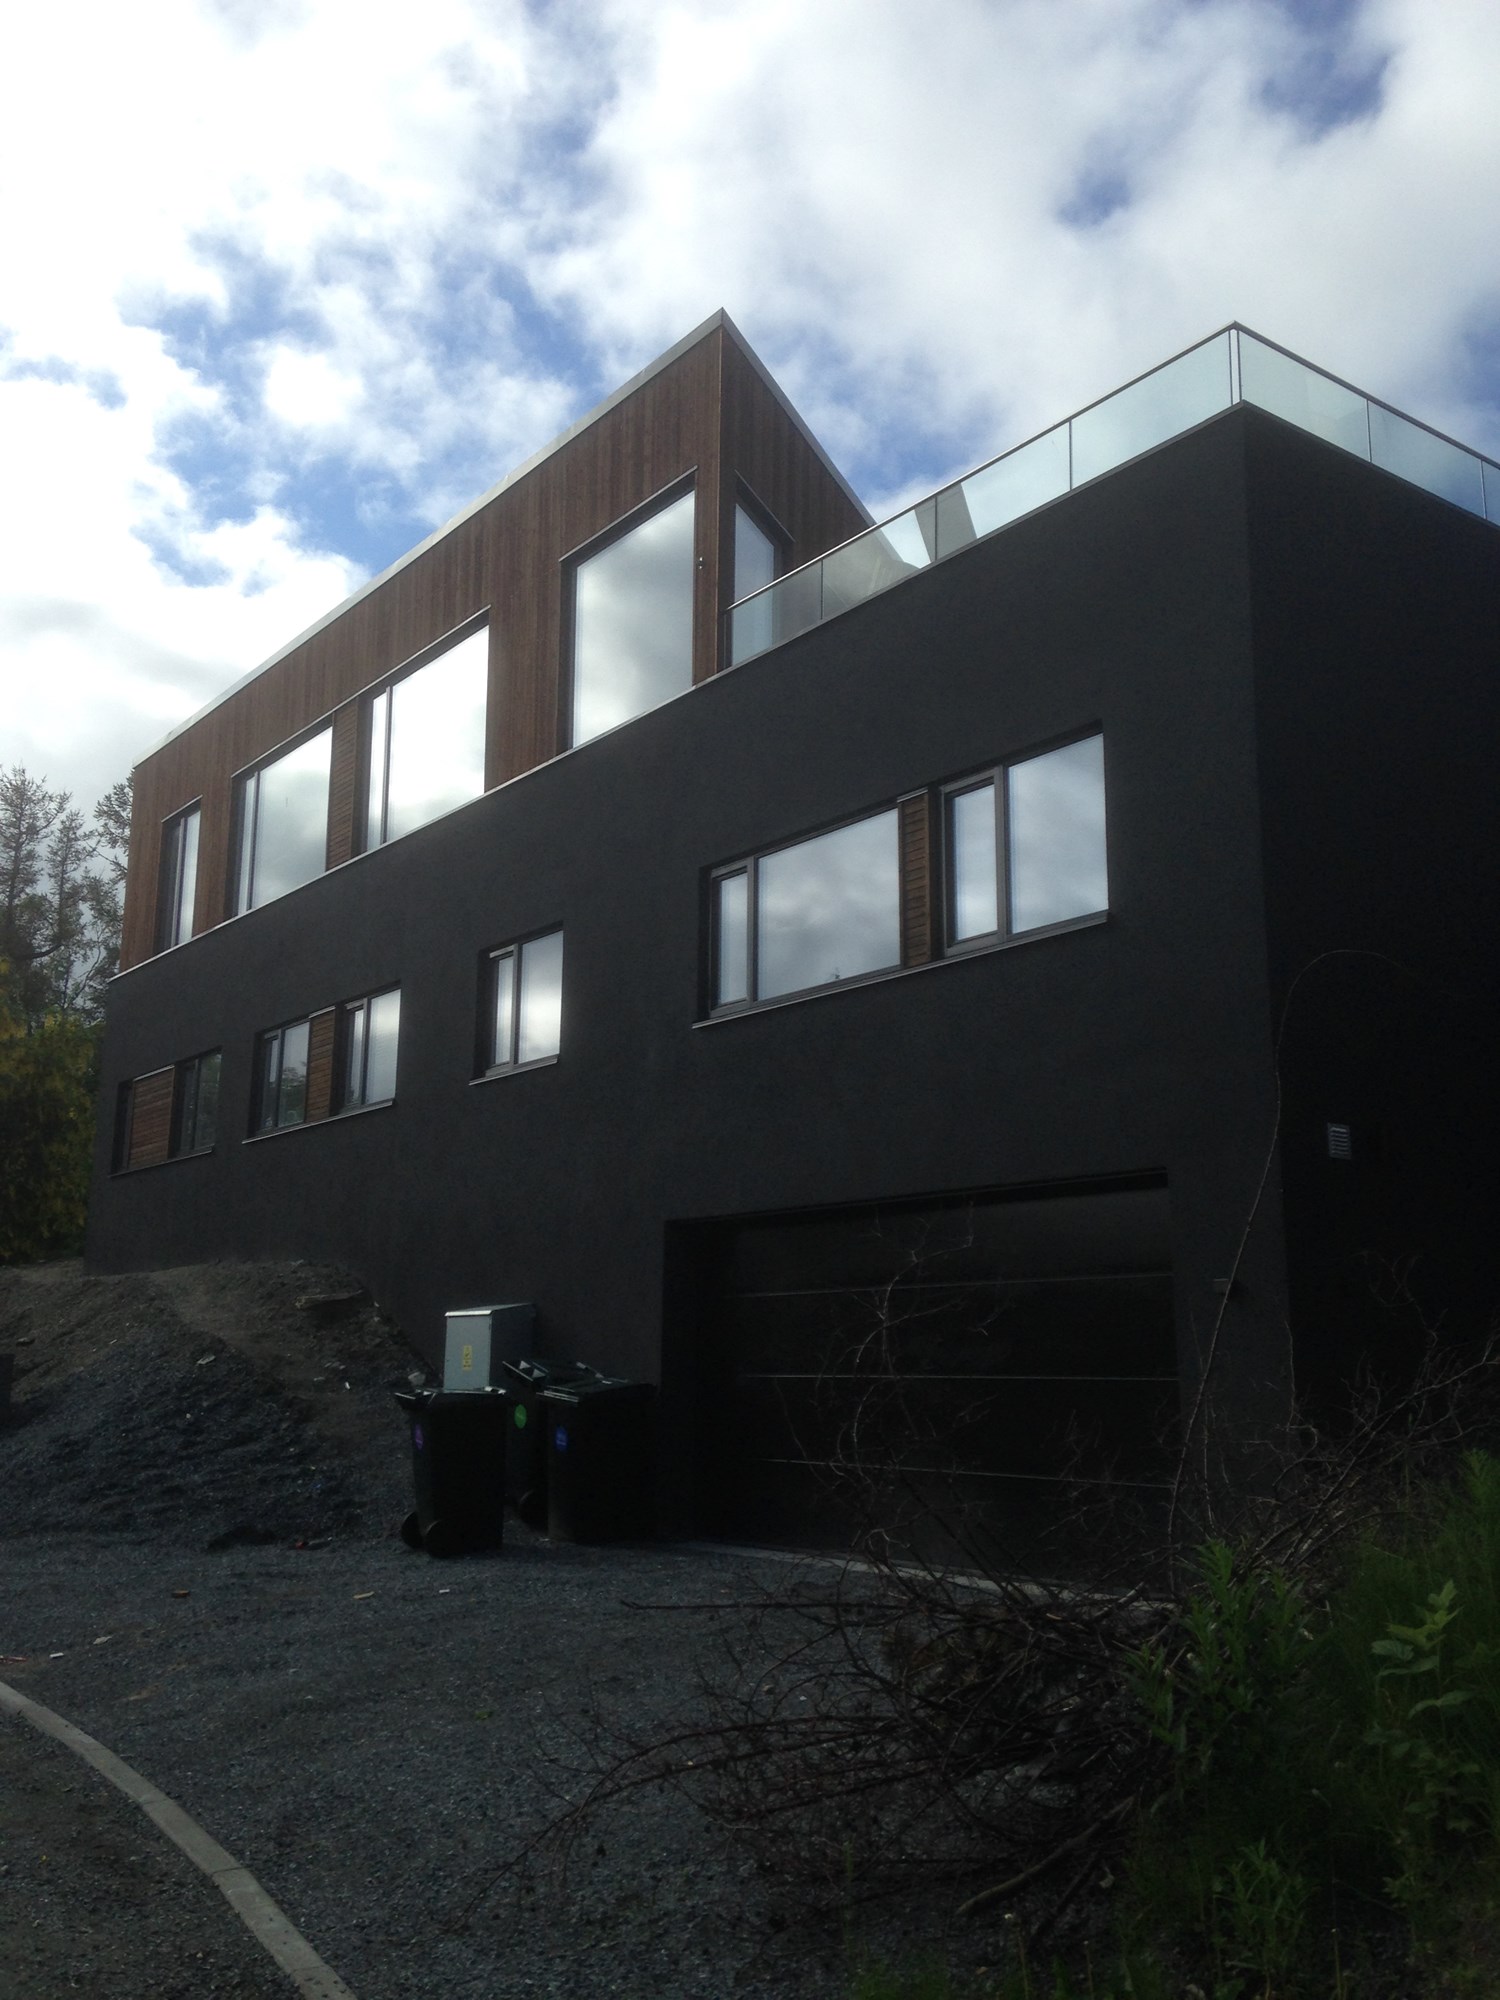 Horsa: Funkis i Trondheim - i Leca isoblokker - Fil 30.09.2015, 00.53.04.jpeg - Horsa